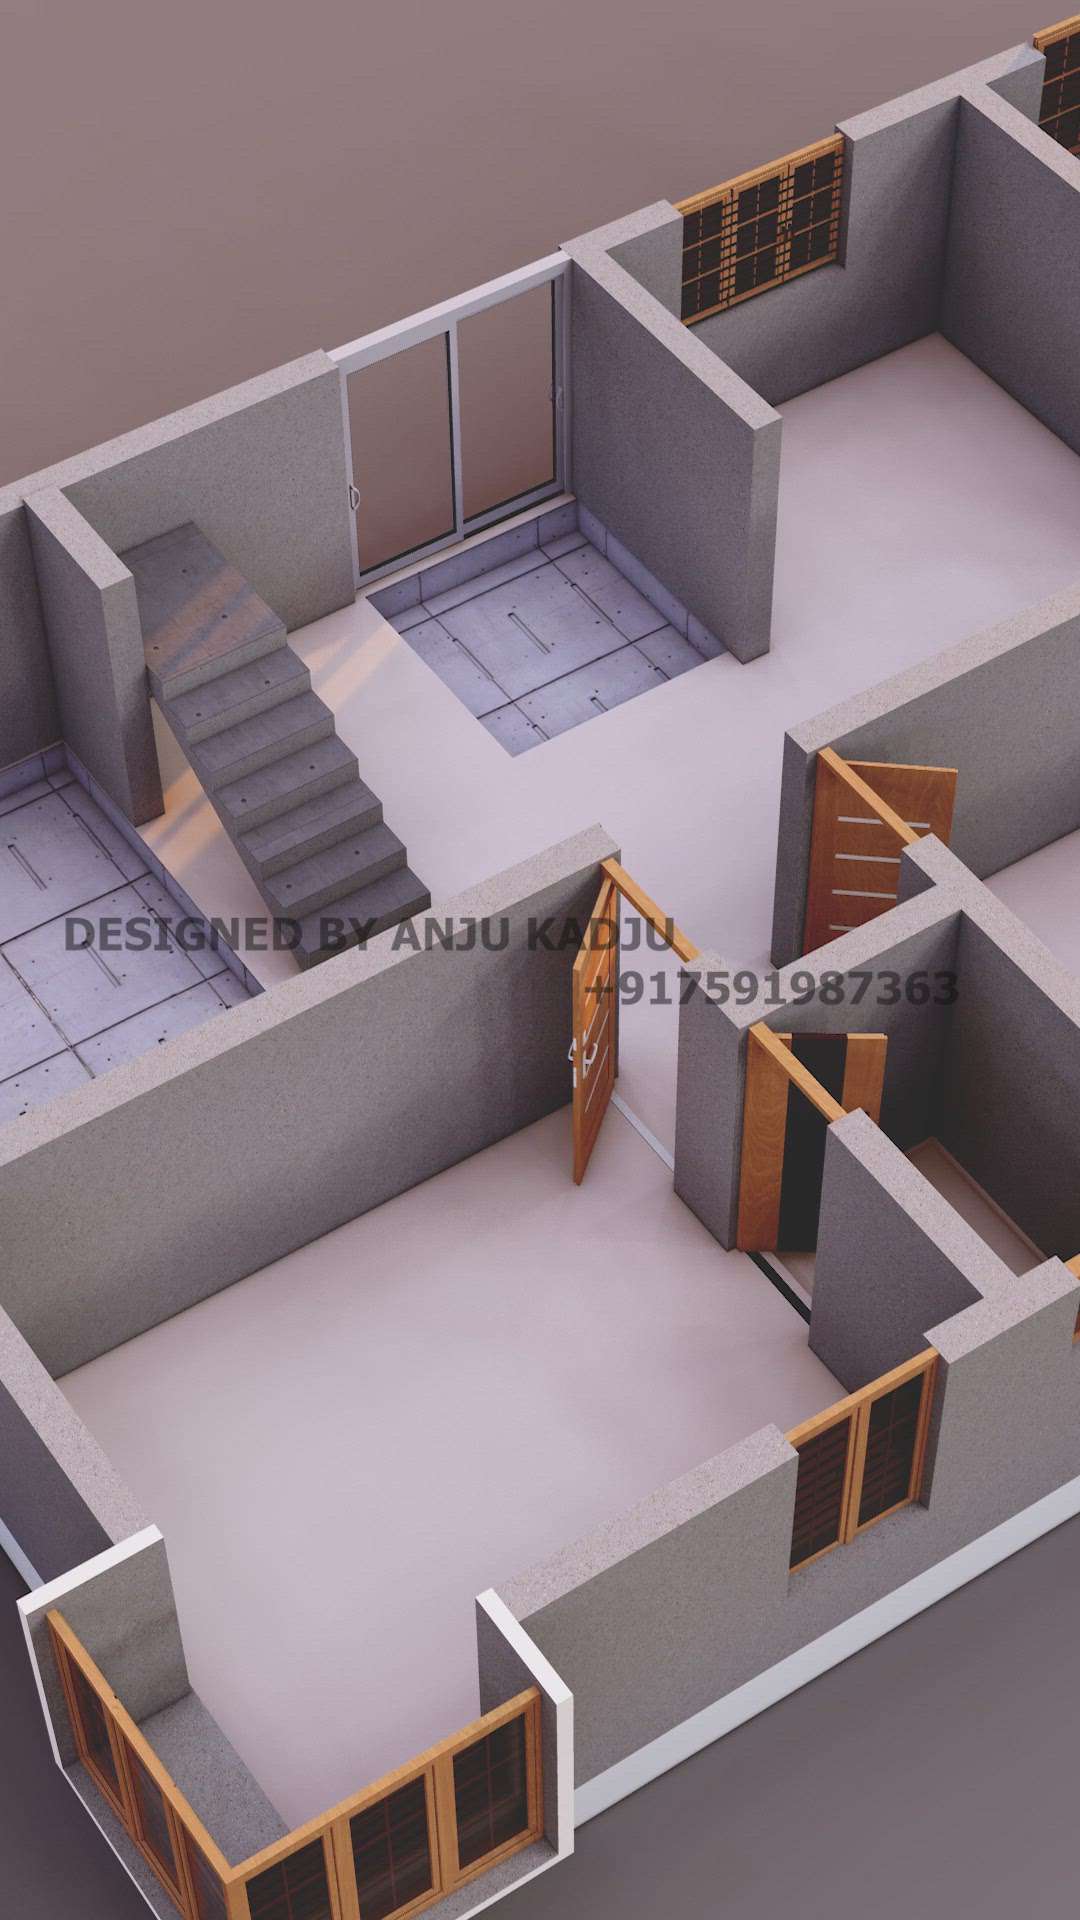 interior design concept
designer anju kadju
 #InteriorDesigner #3dplan